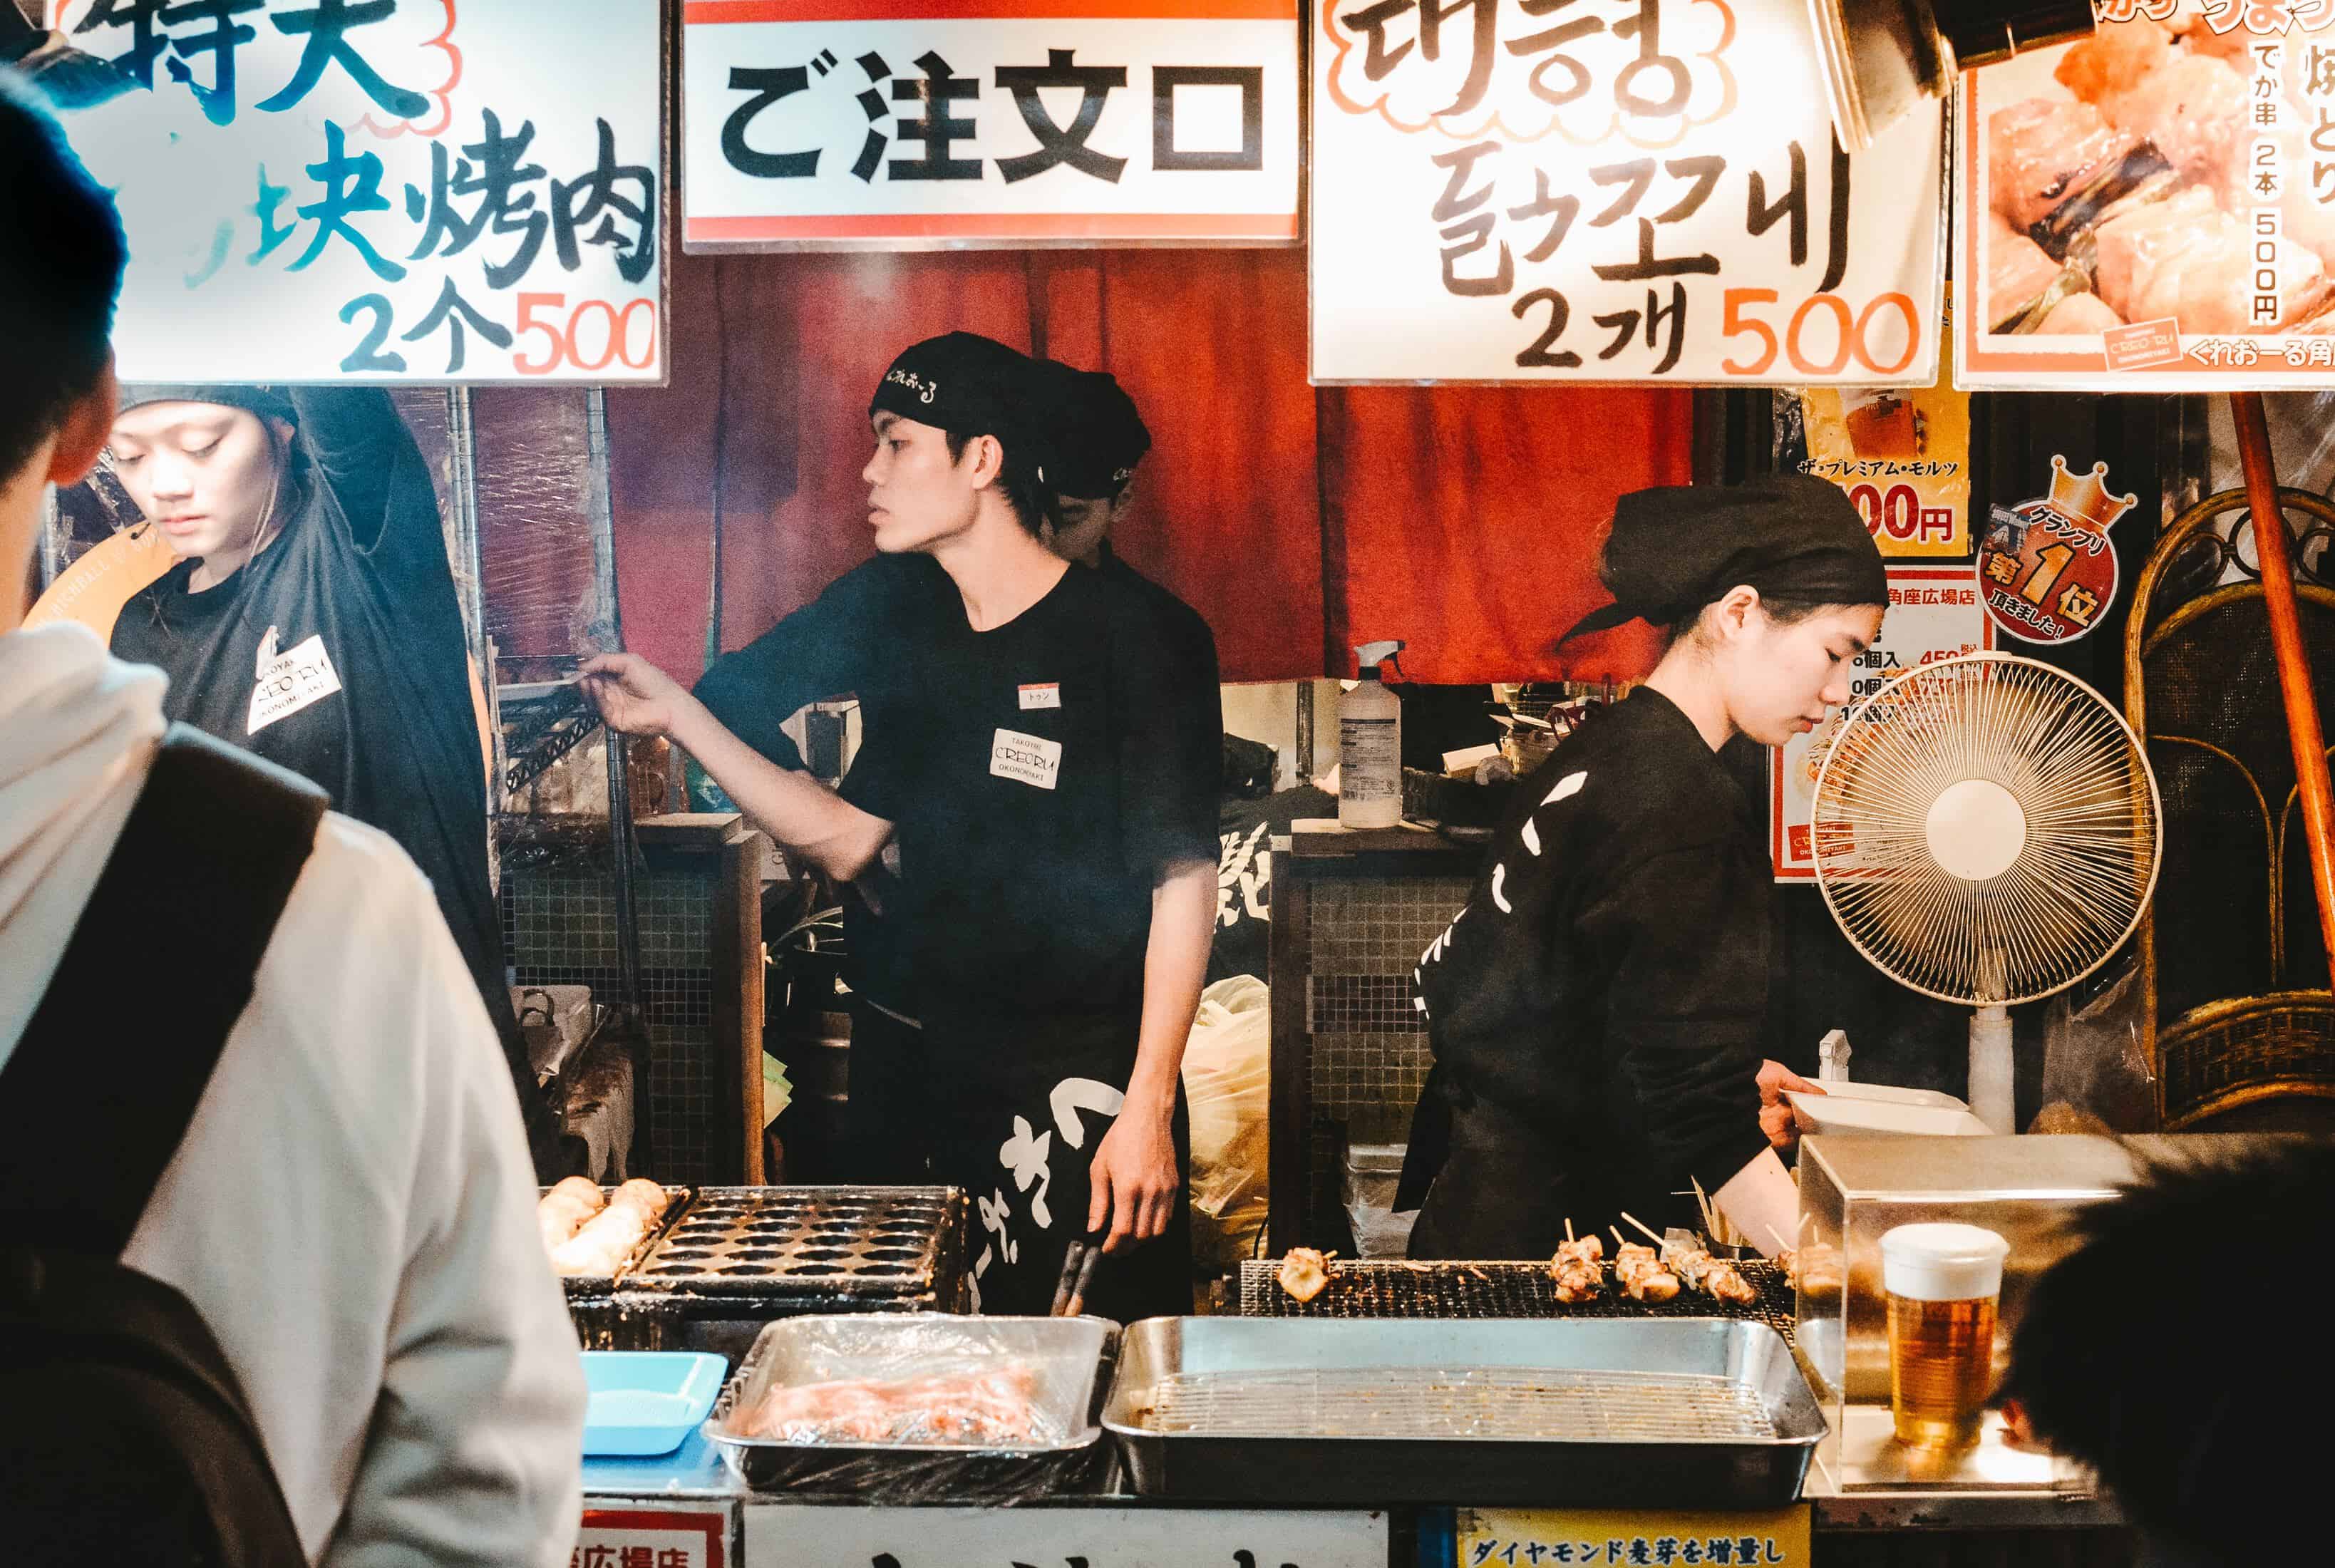 japanese food stall